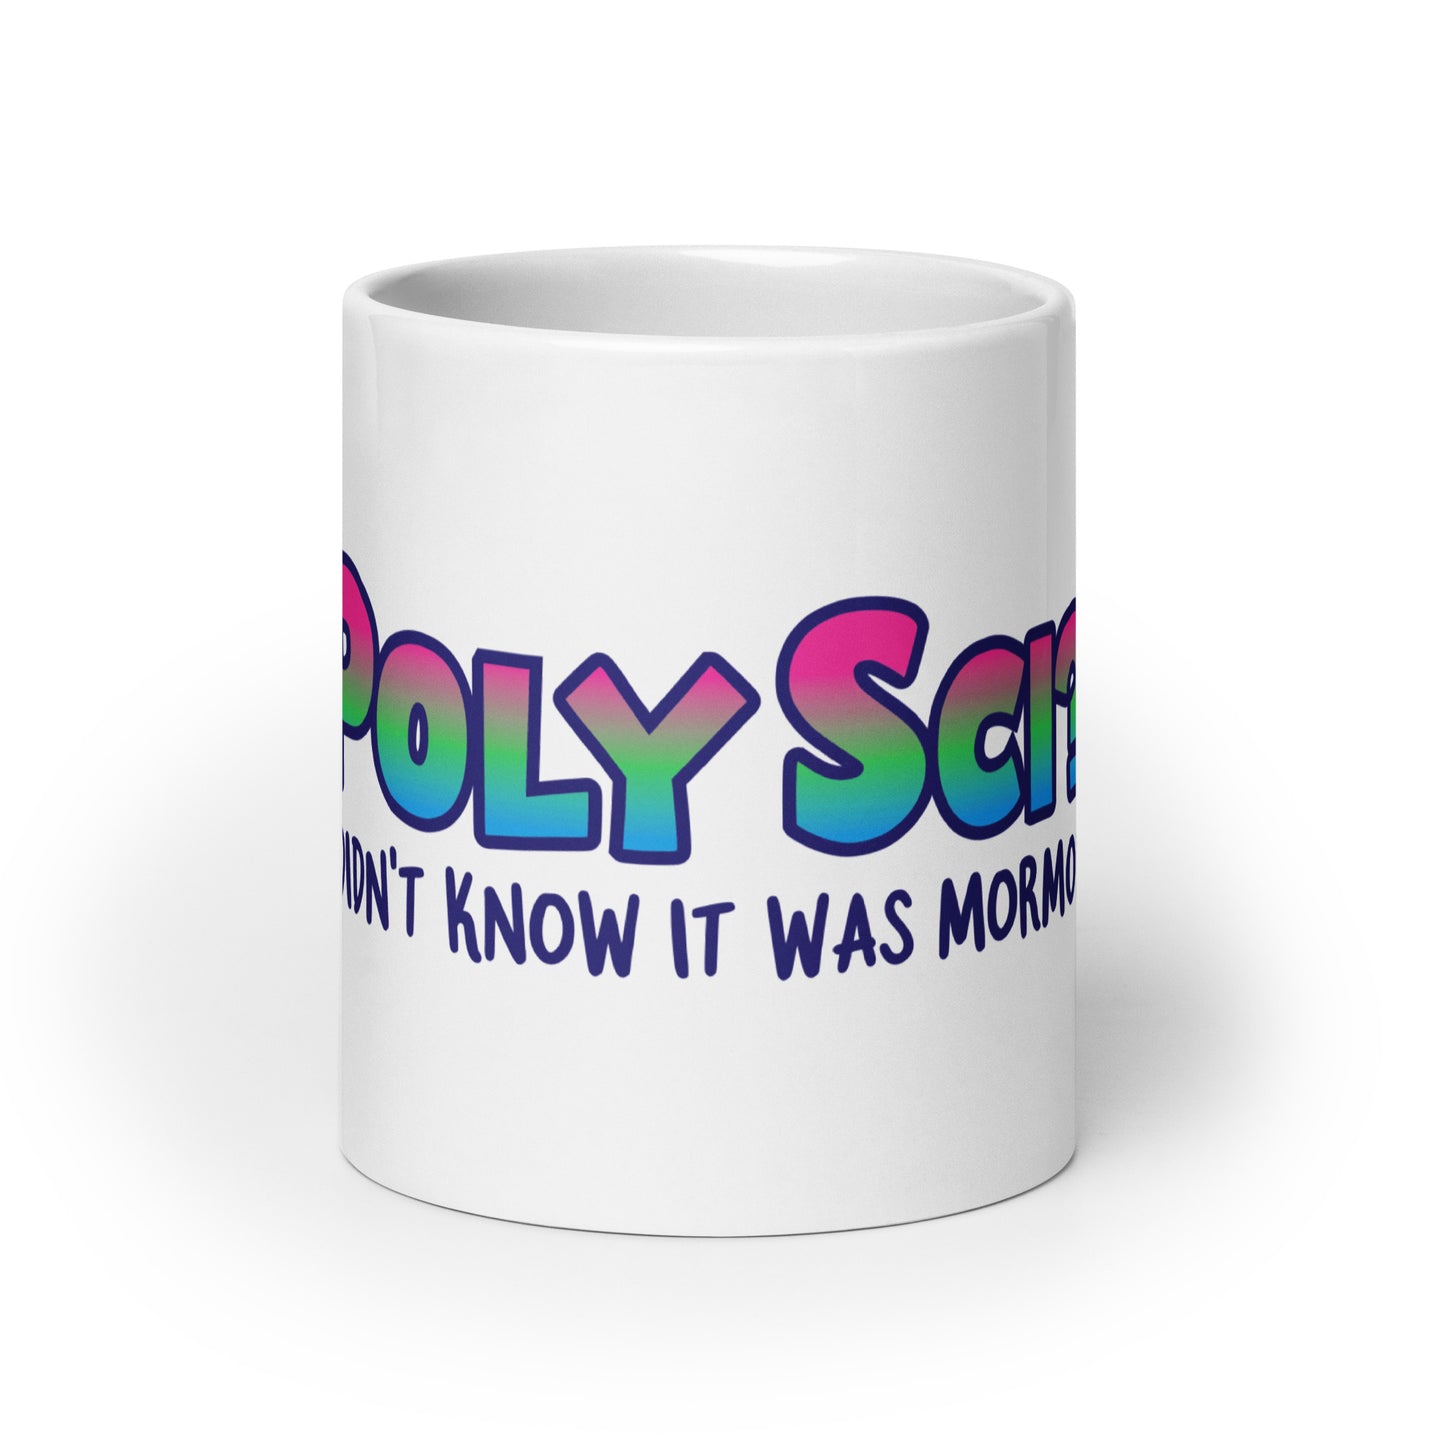 PolySci? I Didn't Know It Was Mormon mug